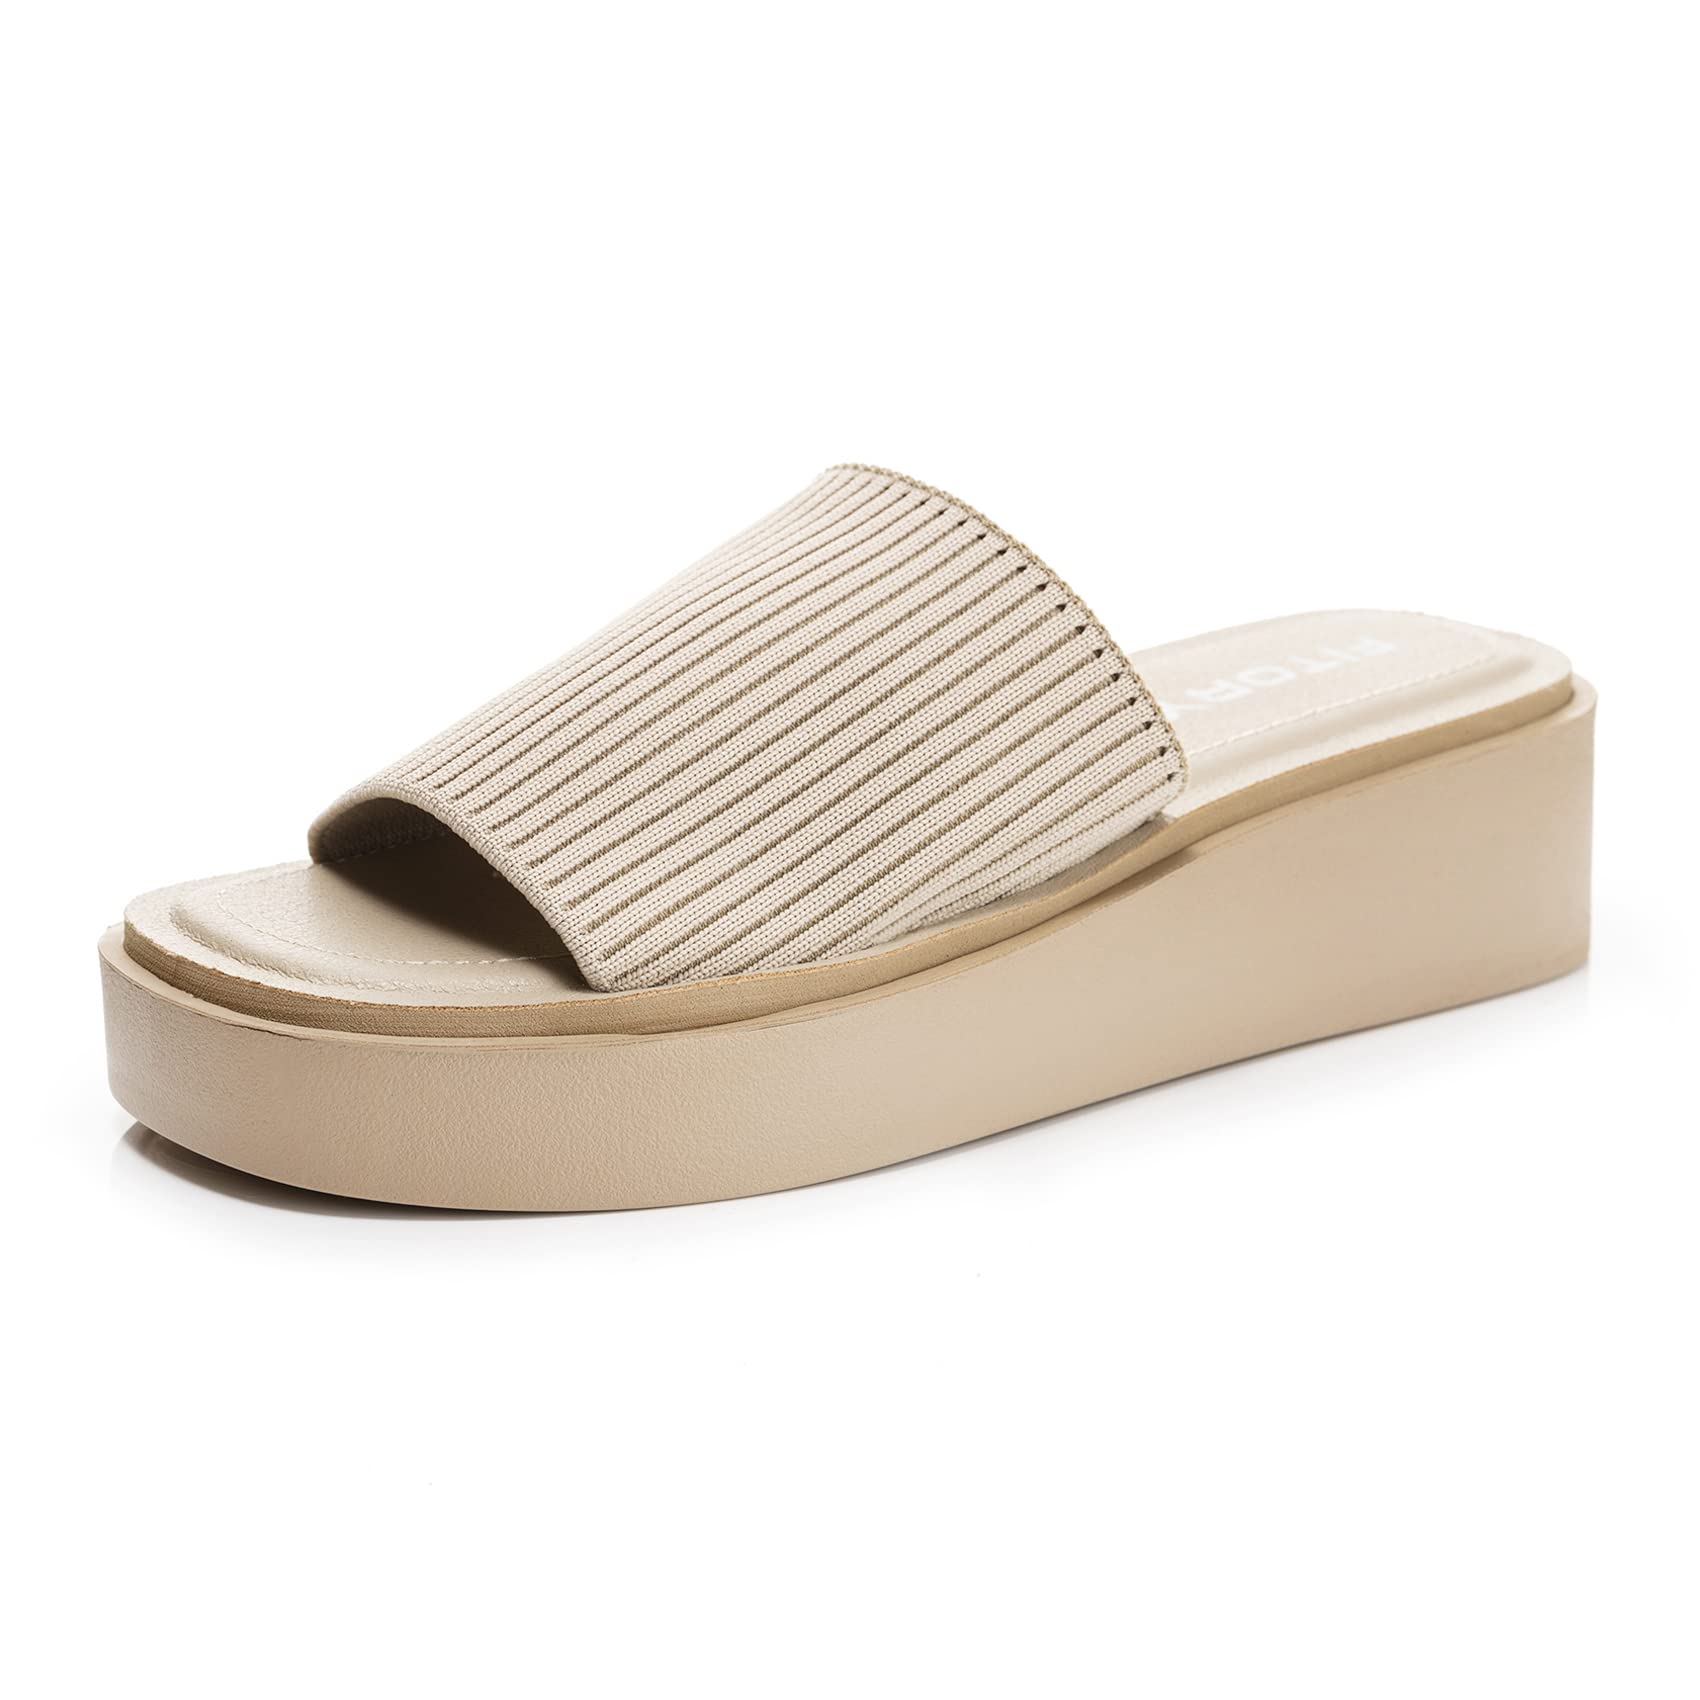 Women's Bare traps Jeyda White Slide On Cushion Comfort Sandals Size 11  E | eBay